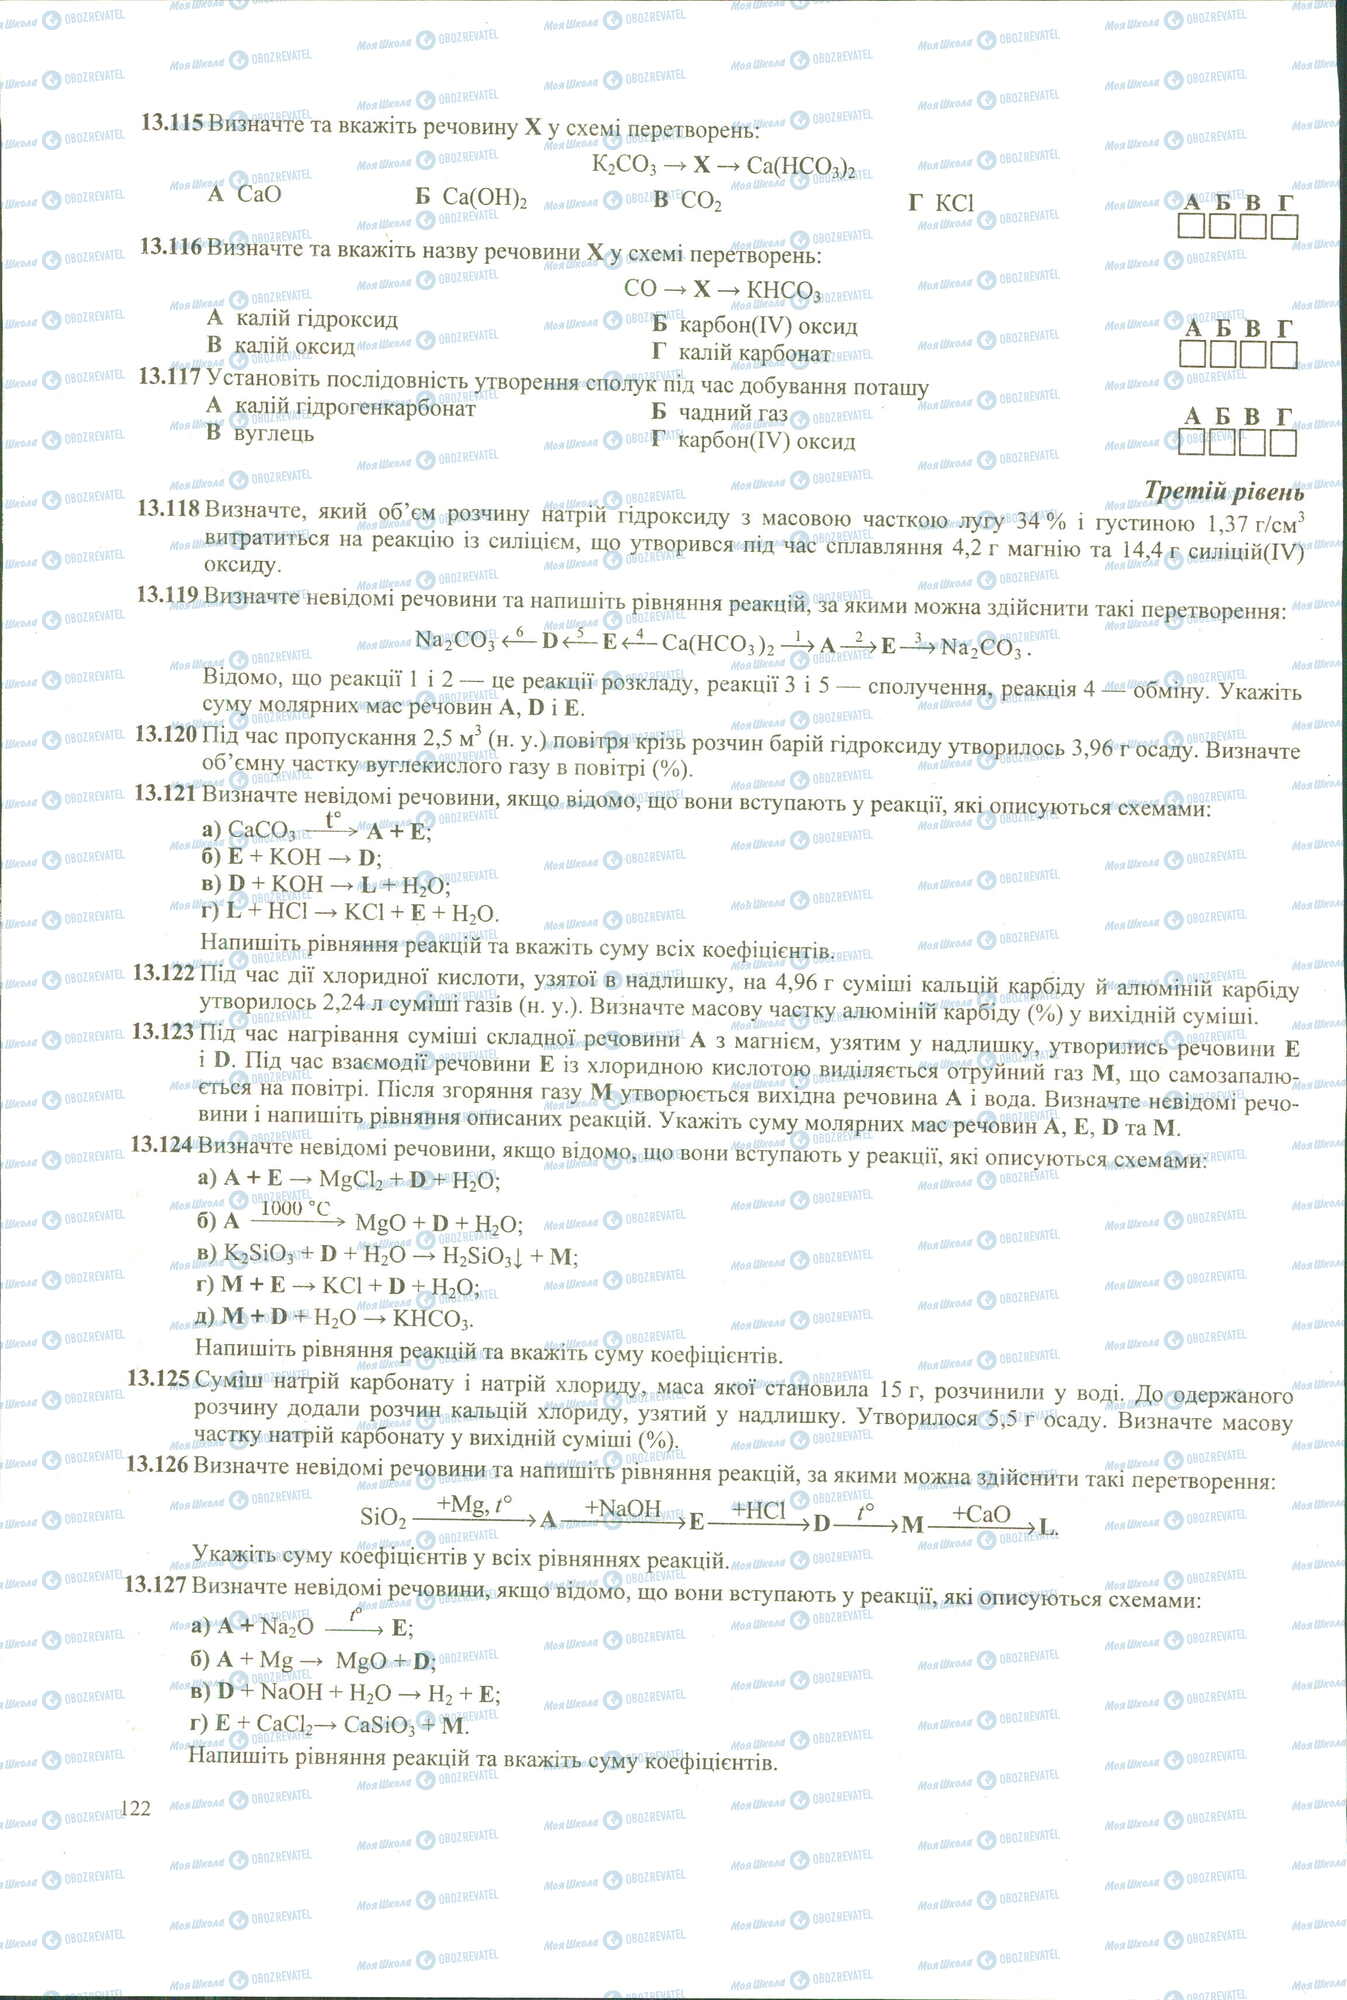 ЗНО Химия 11 класс страница 115-127